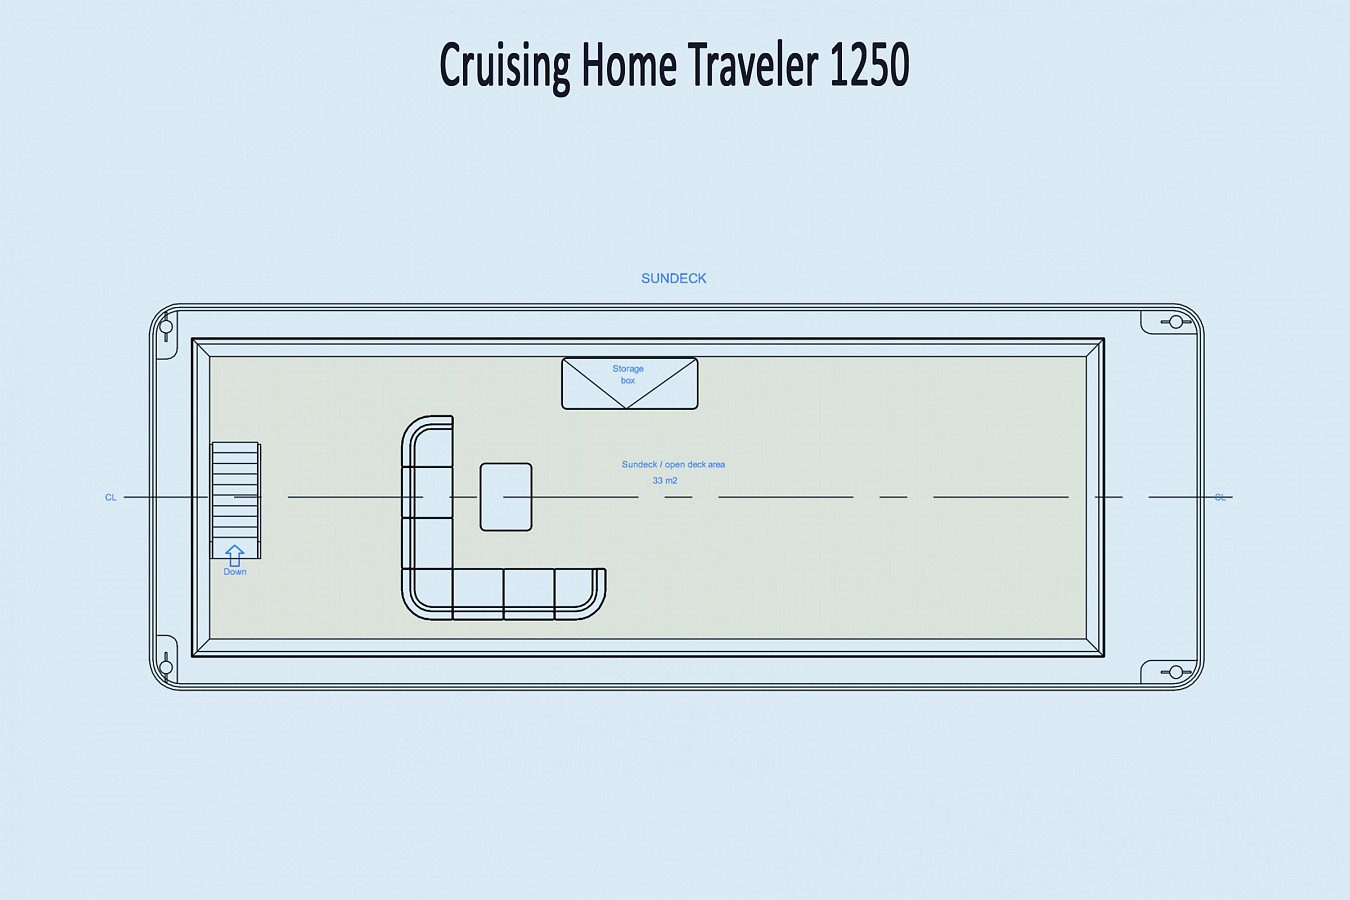 Cruising Home Traveler 1250